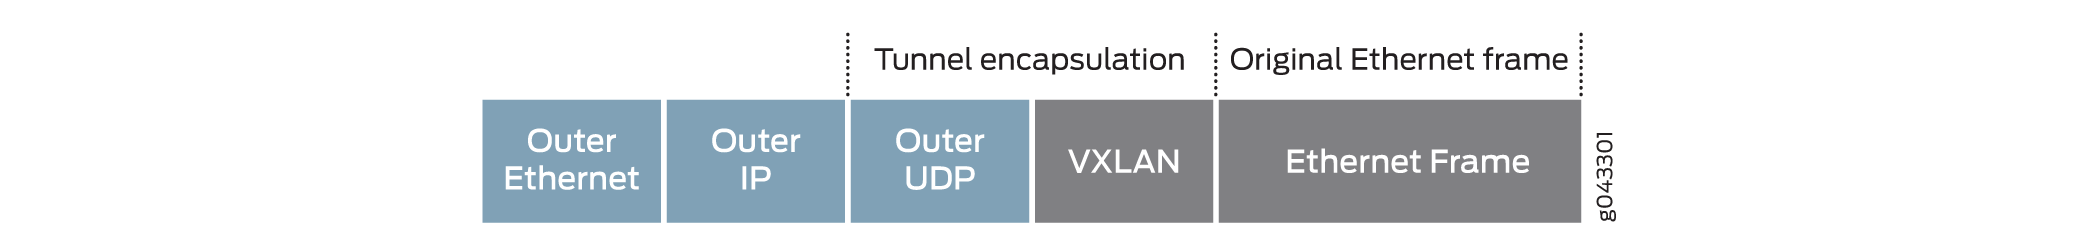 Underlay IP Network with VXLAN Encapsulation